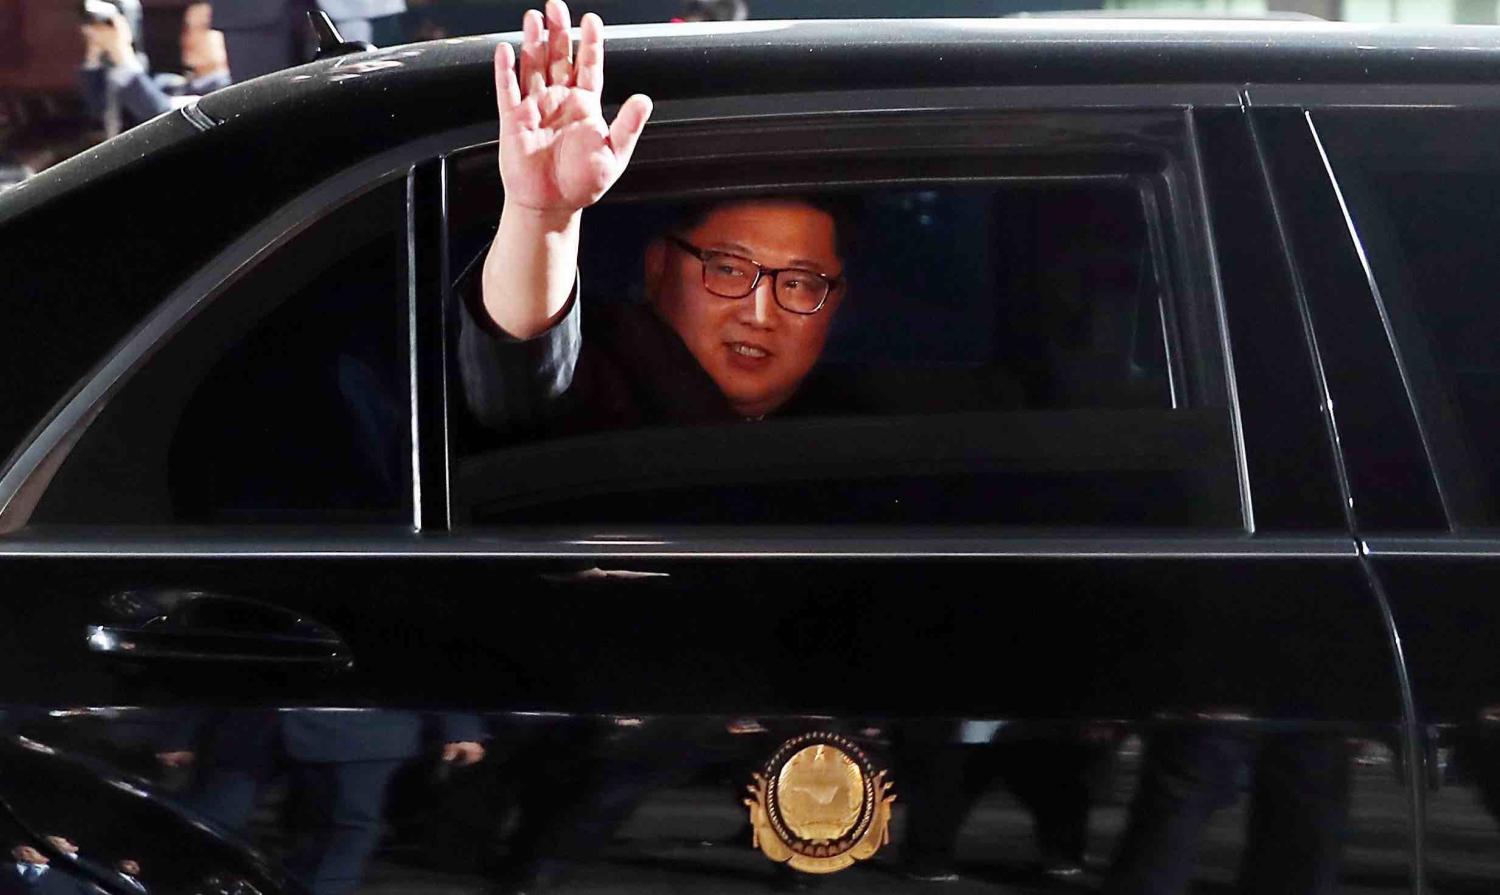 North Korean leader Kim Jong-un waves when departing the inter-Korean summit in Panmunjom last month (Photo: Getty Images)